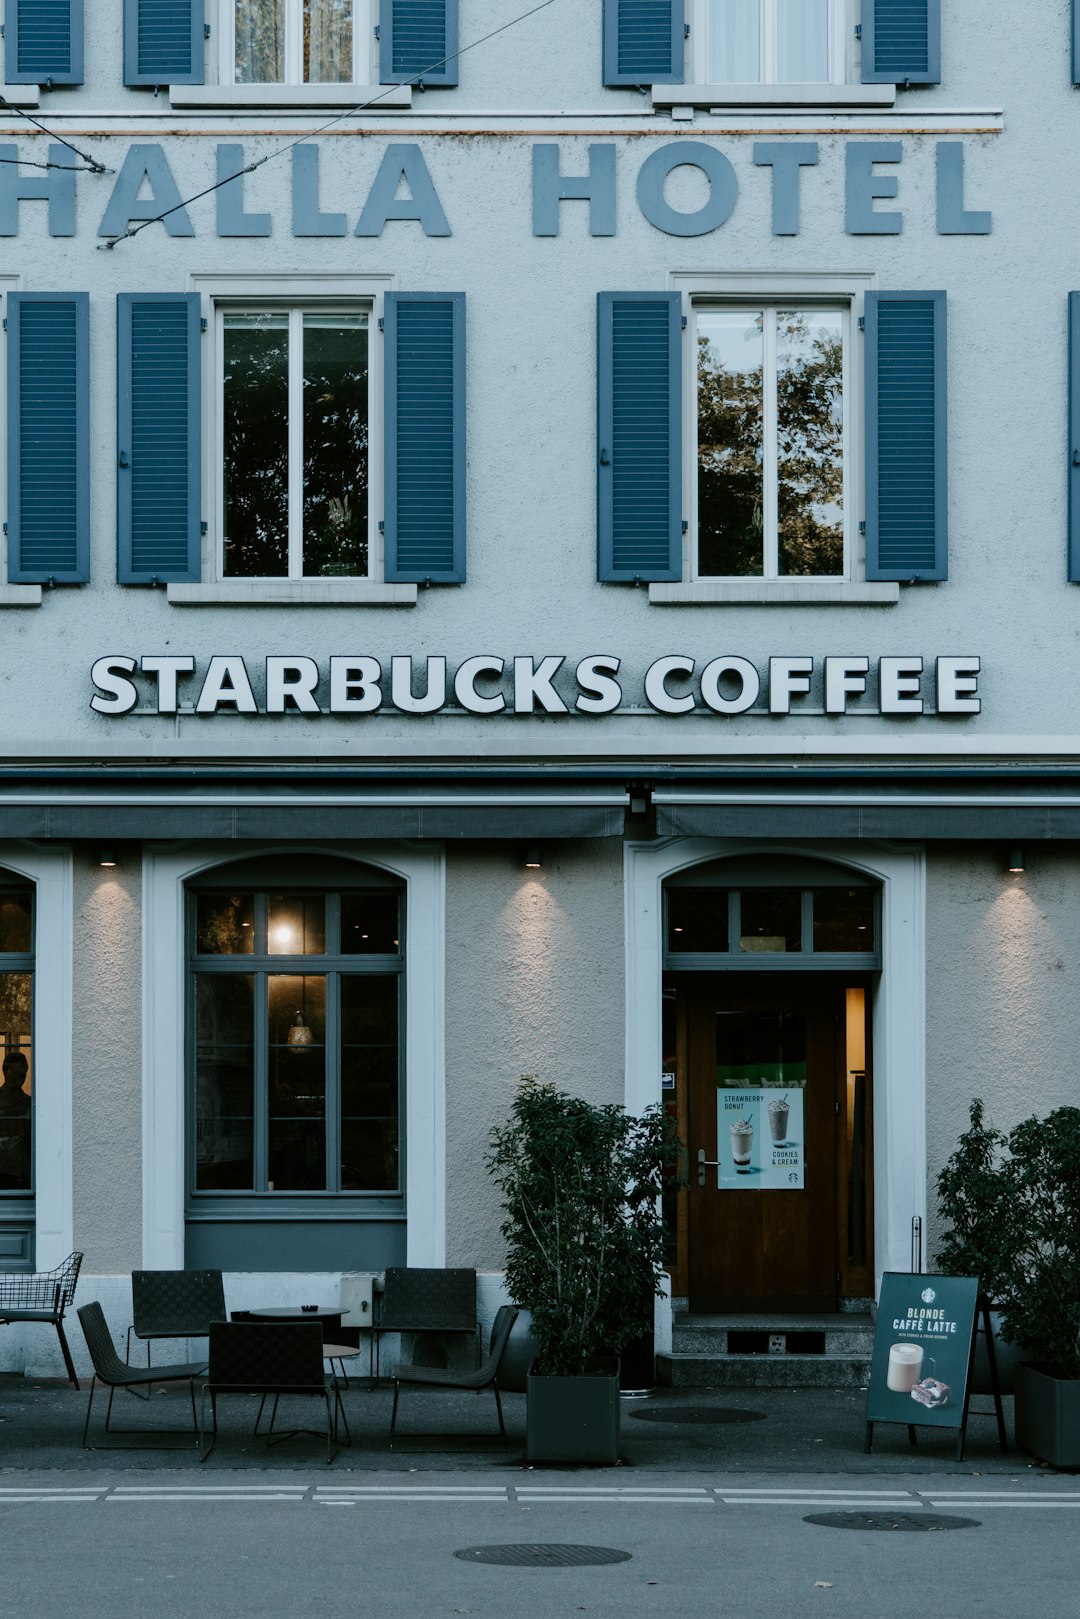 Starbucks Coffee building